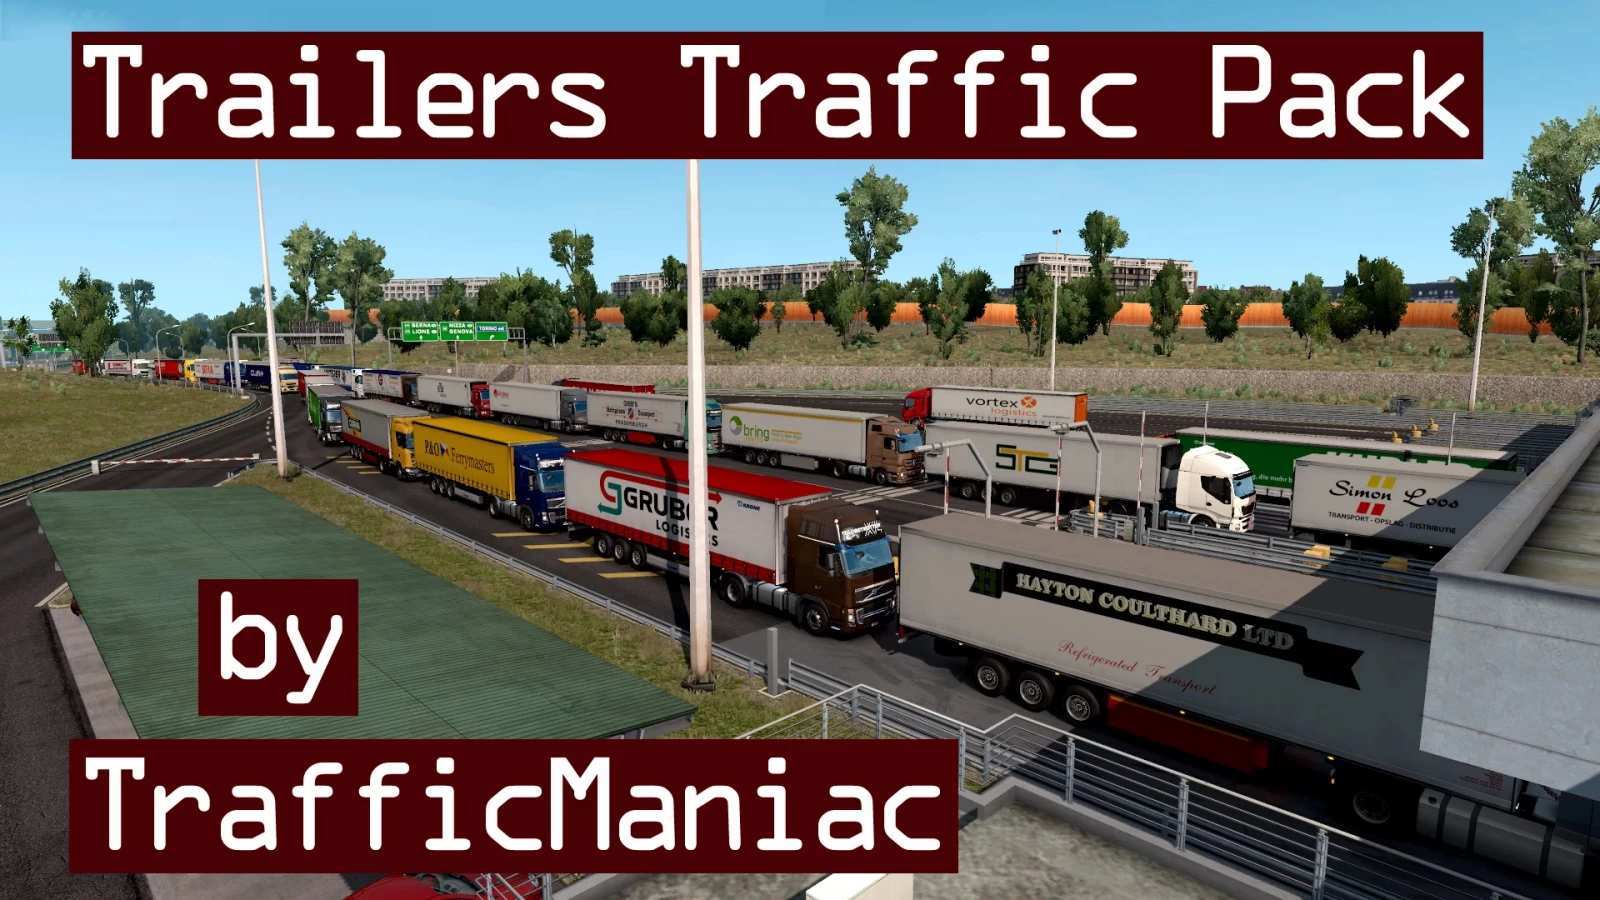 Trailers Traffic Pack v7.0 by TrafficManiac (1.46.x) for ATS